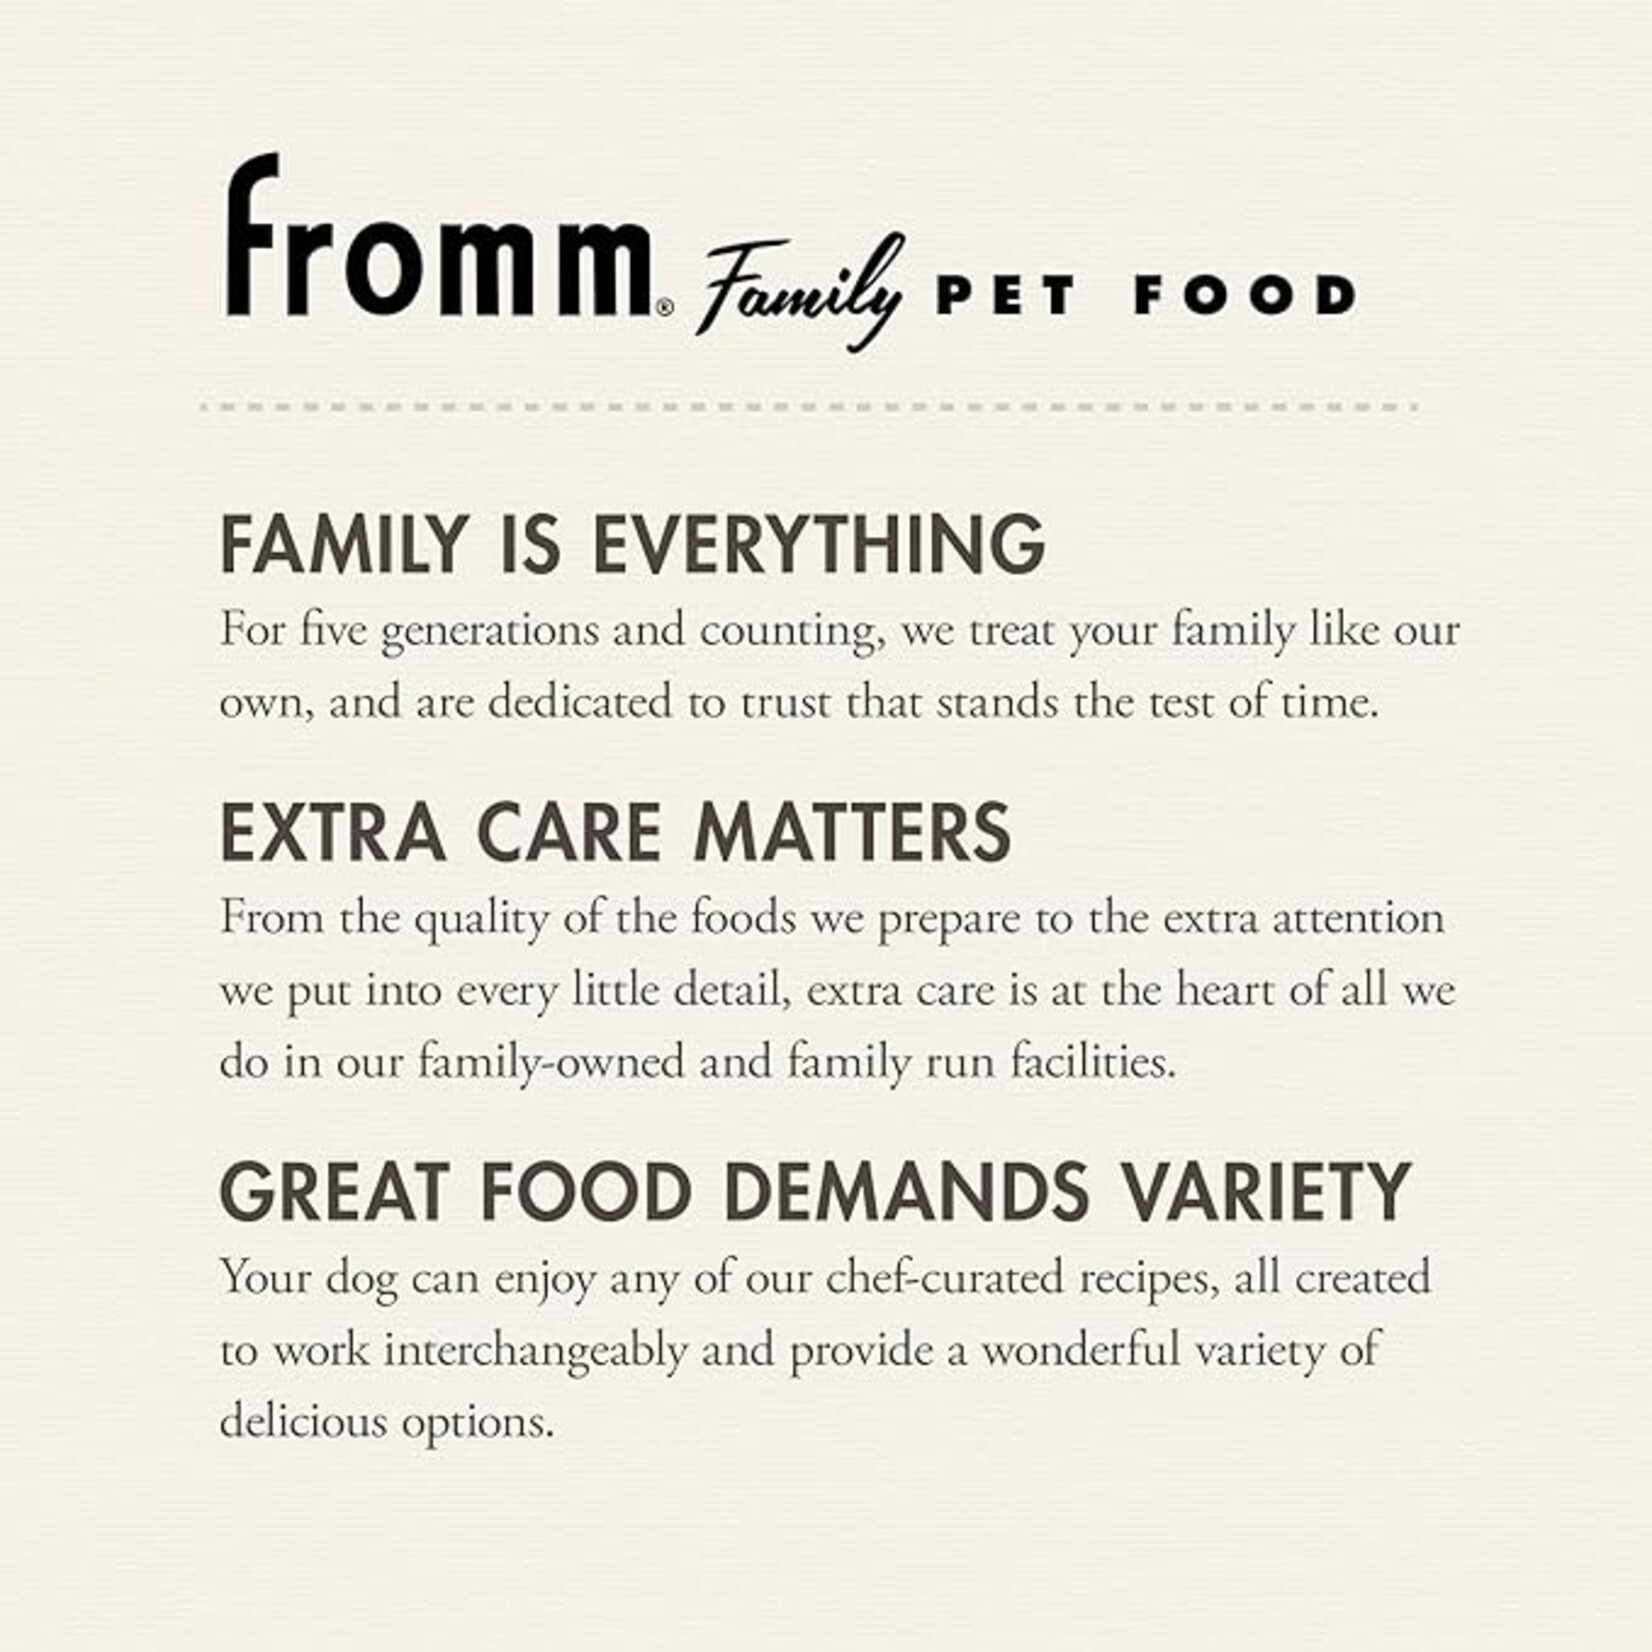 Fromm Fromm Four-Star Grain Free Pork & Peas 26lbs